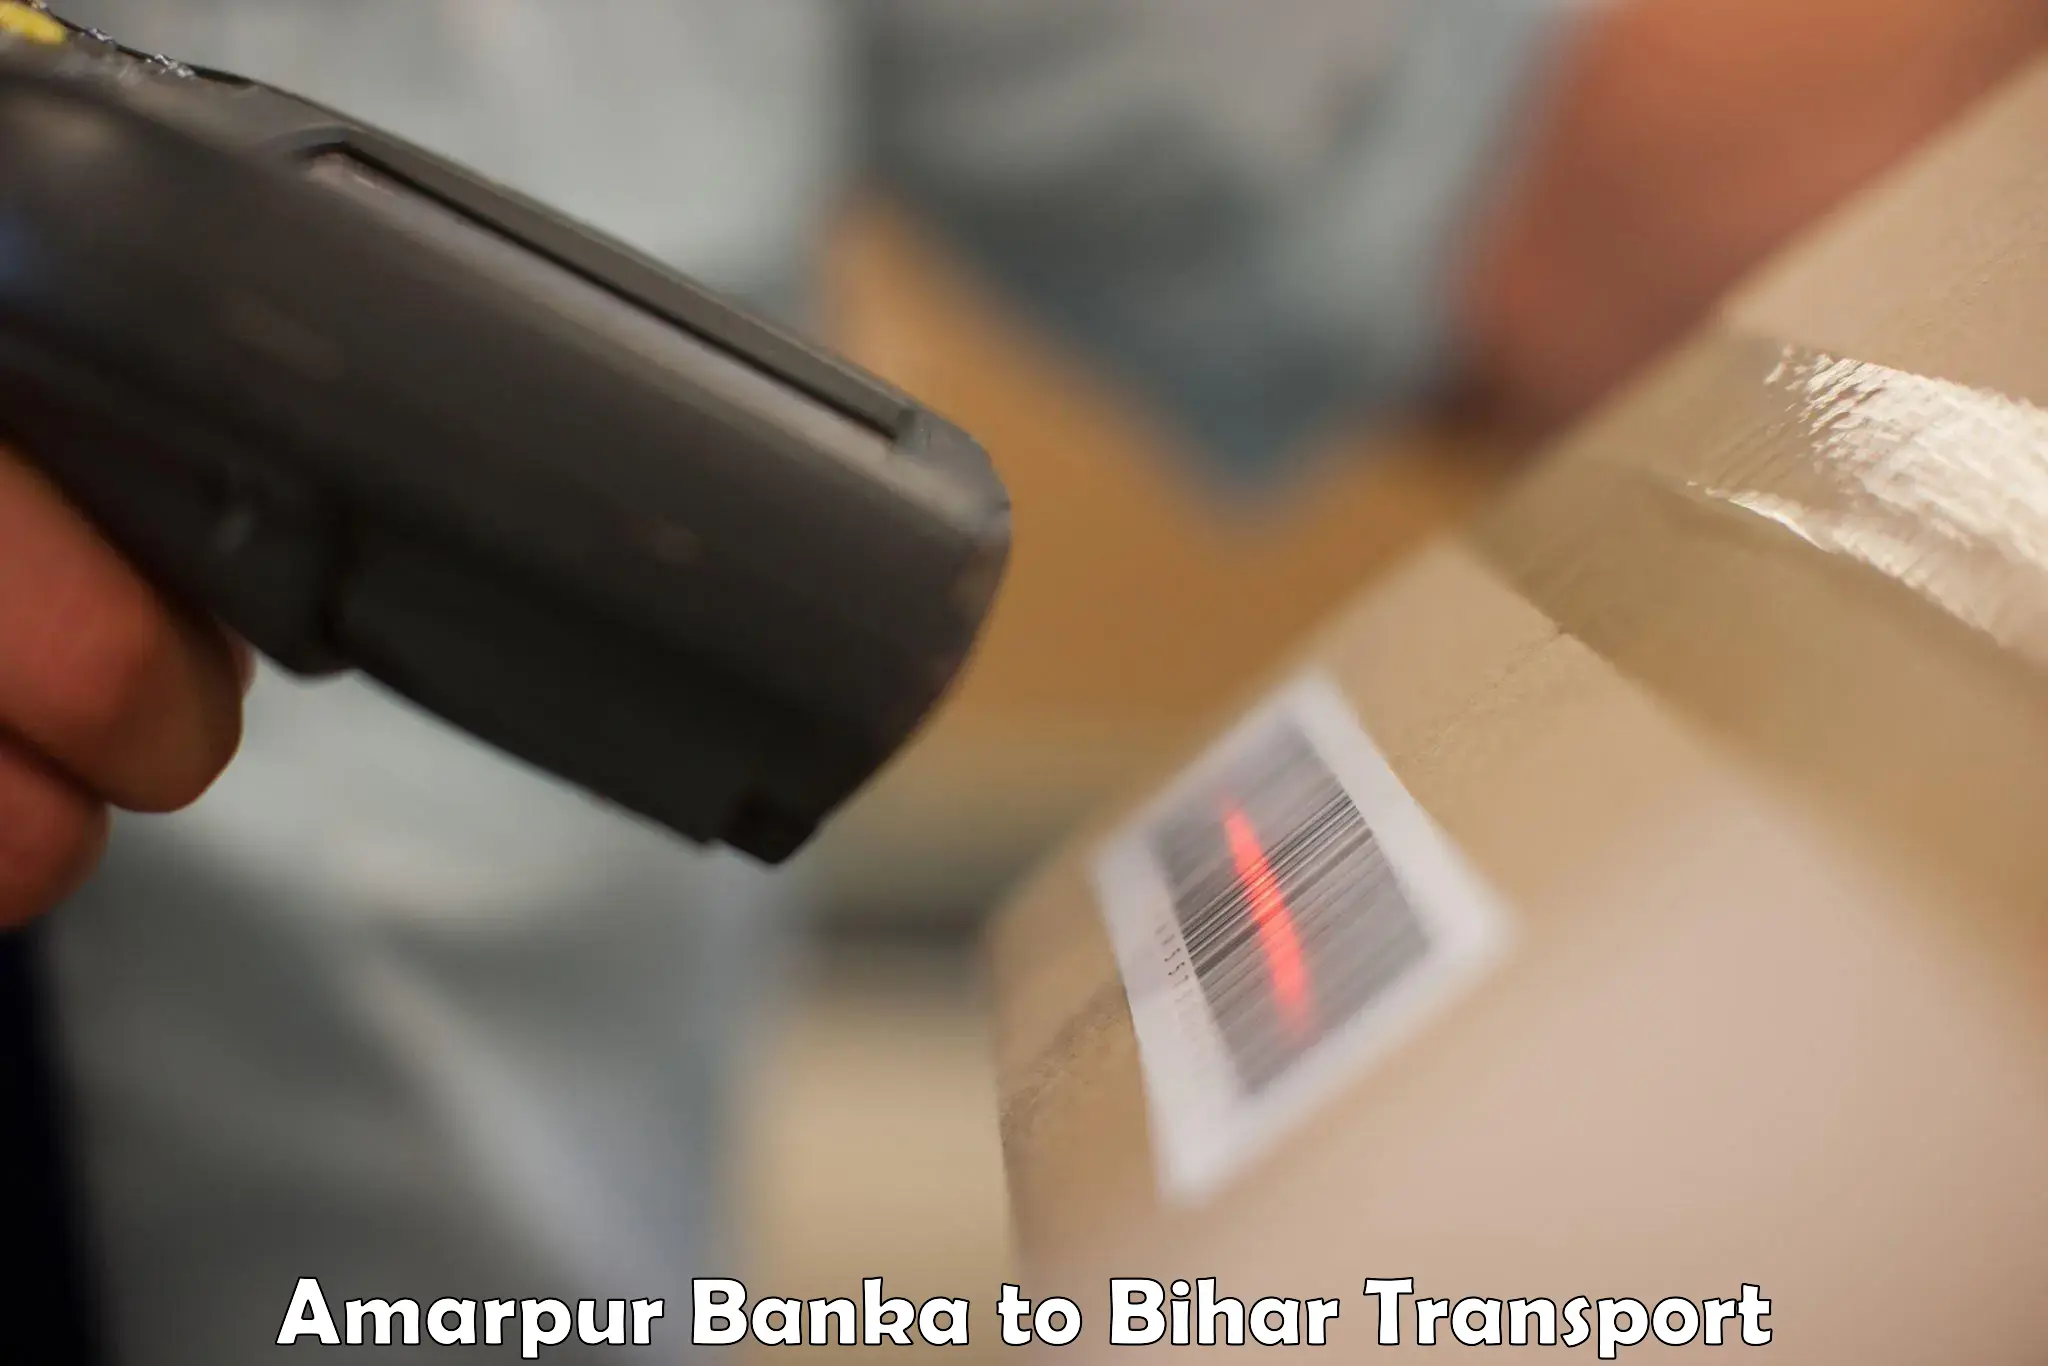 Sending bike to another city Amarpur Banka to Jaynagar